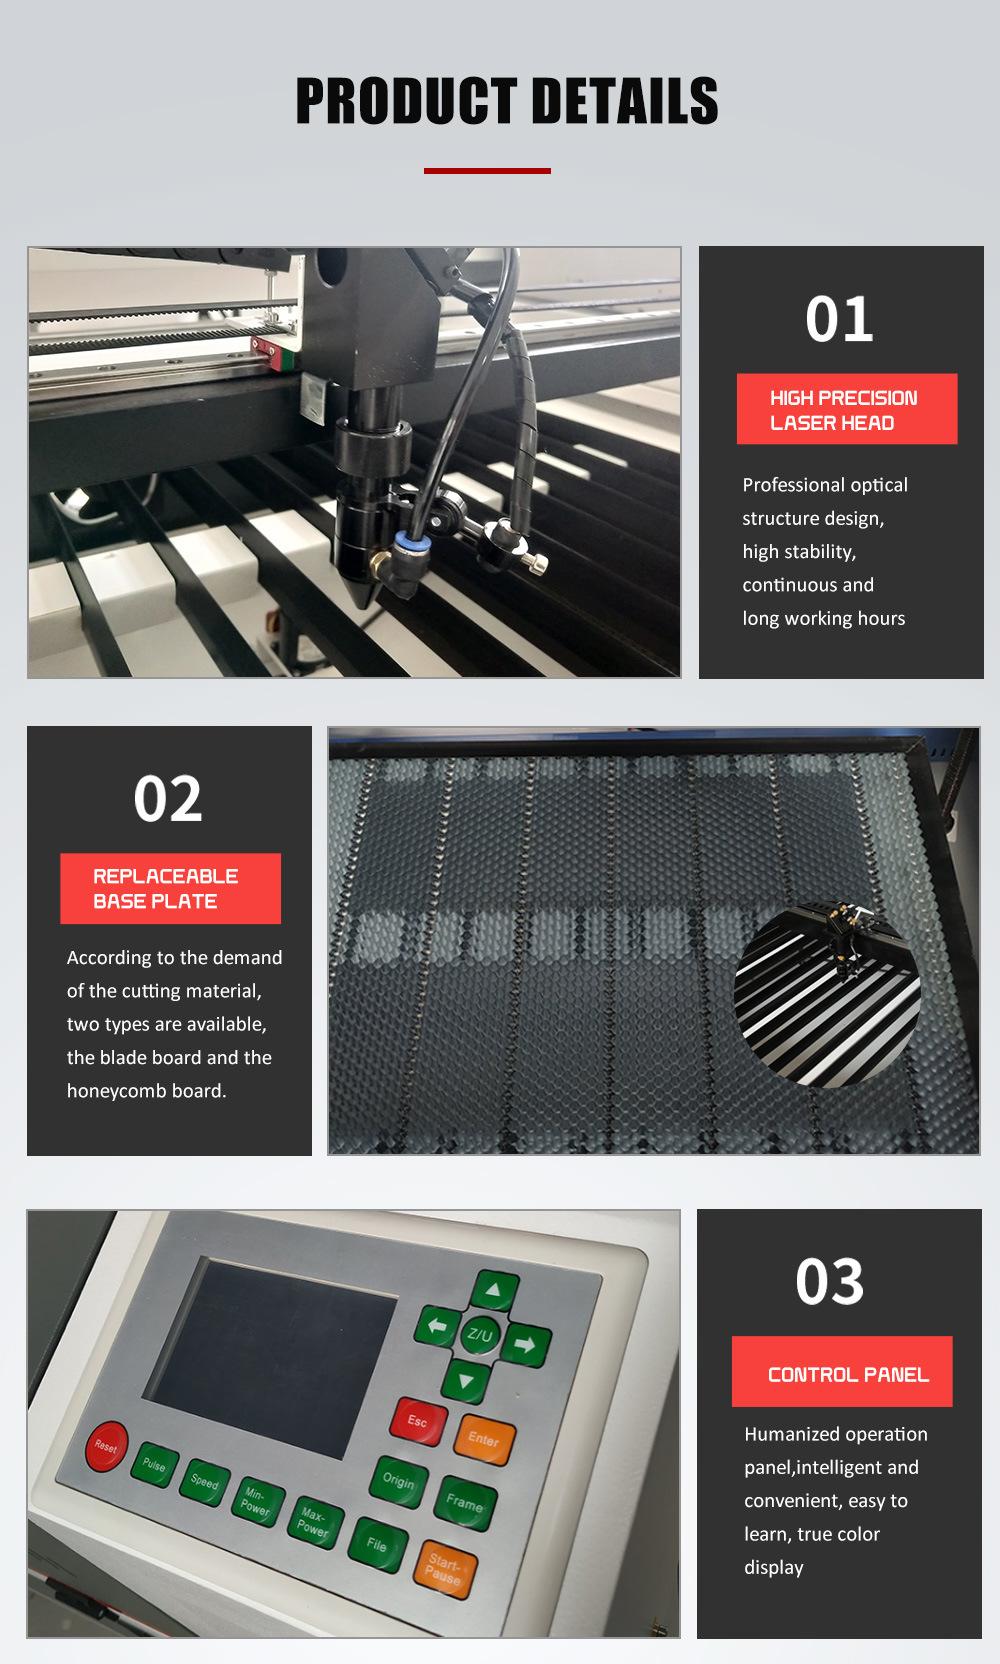 80W/100W Ruida Laser Engraver Cutter Machine Desktop 6090 Ruida System 900*600mm